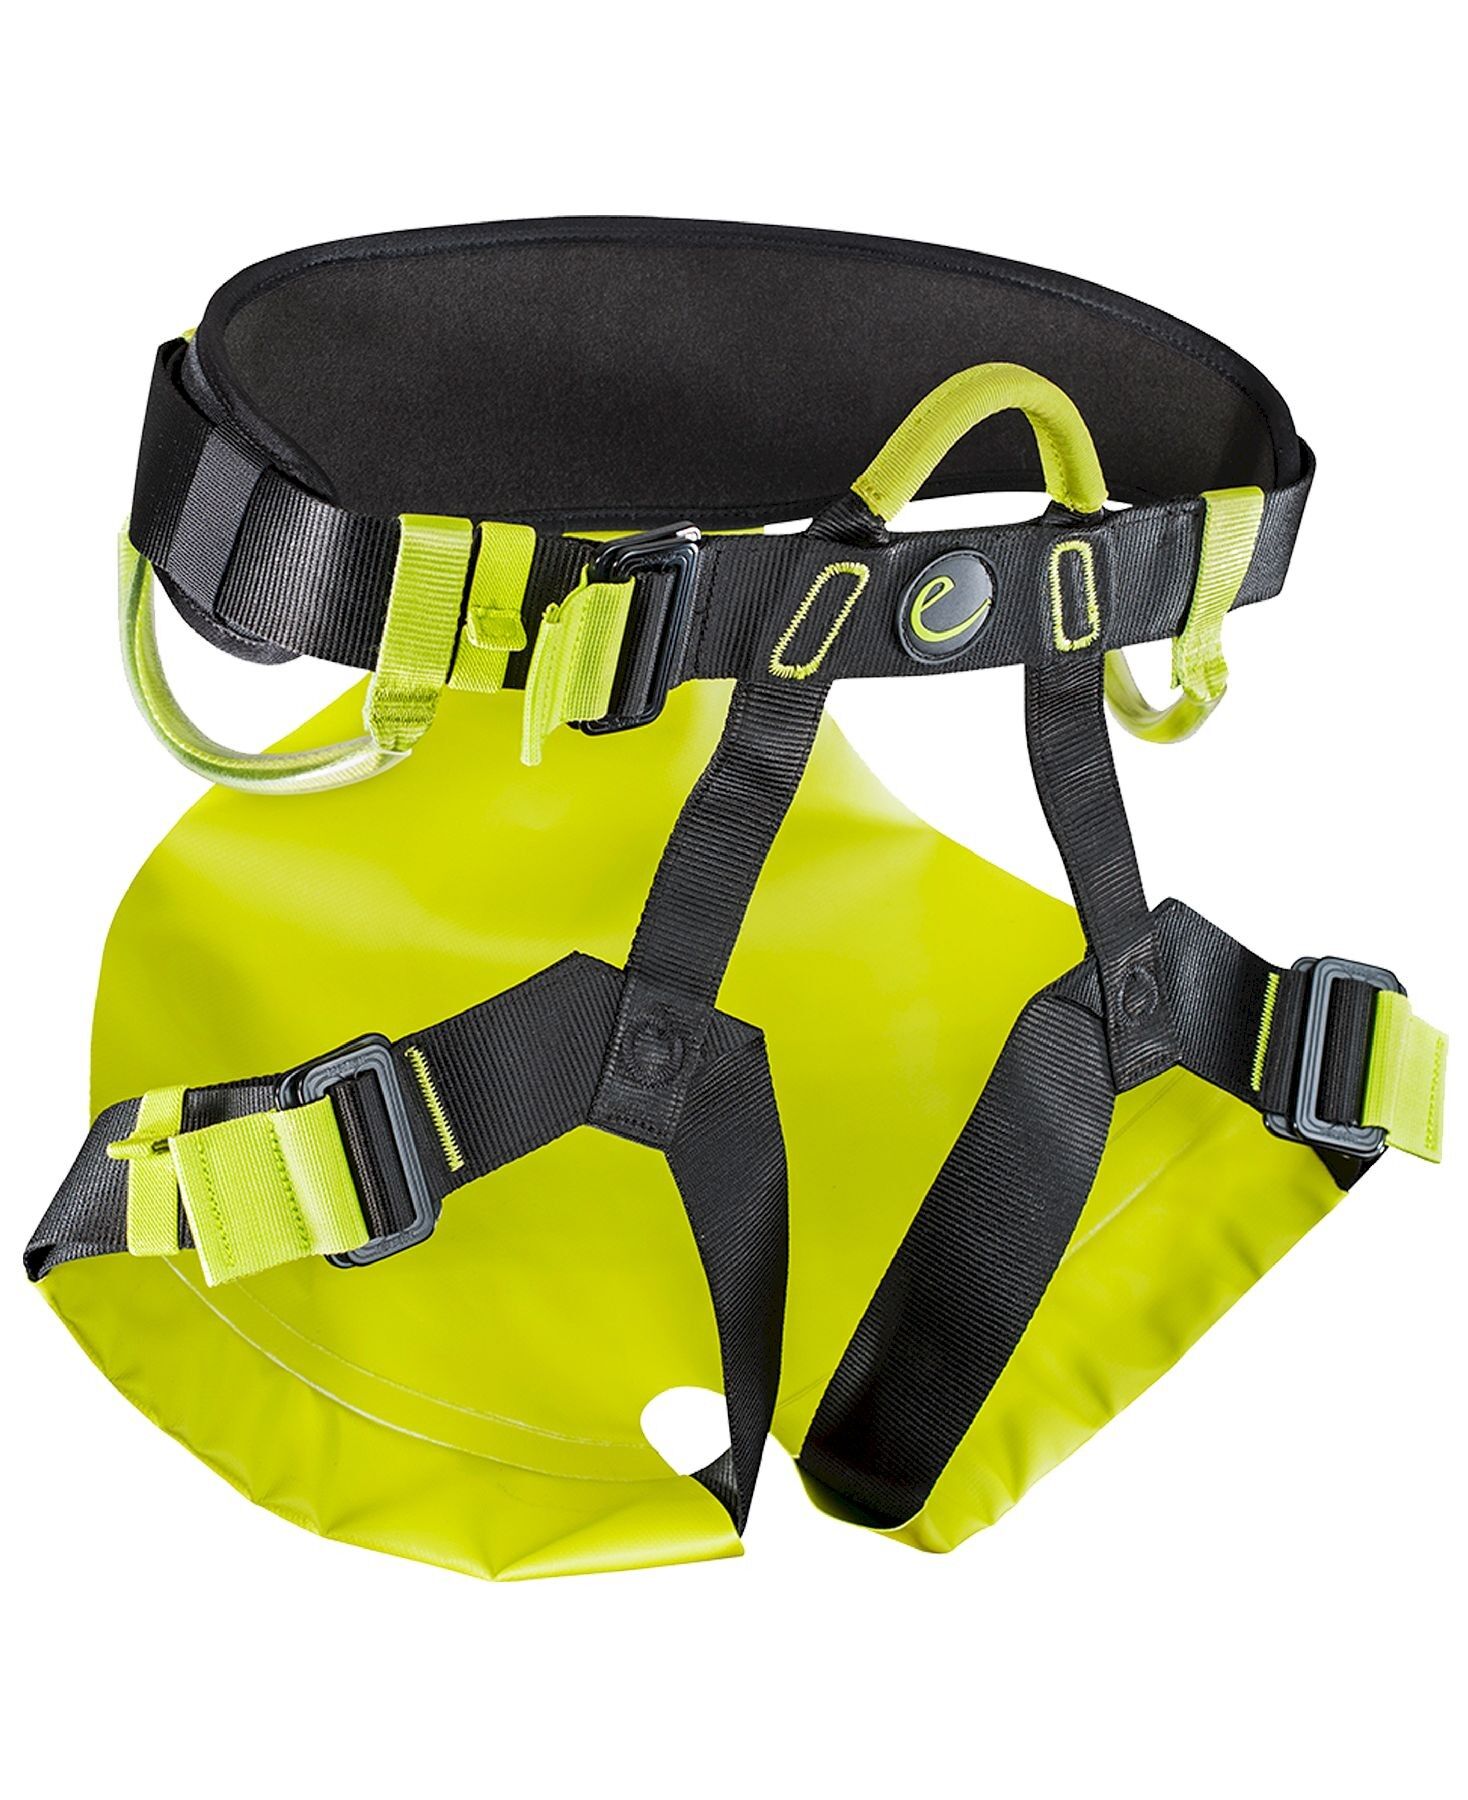 Edelrid Irupu - Climbing harness